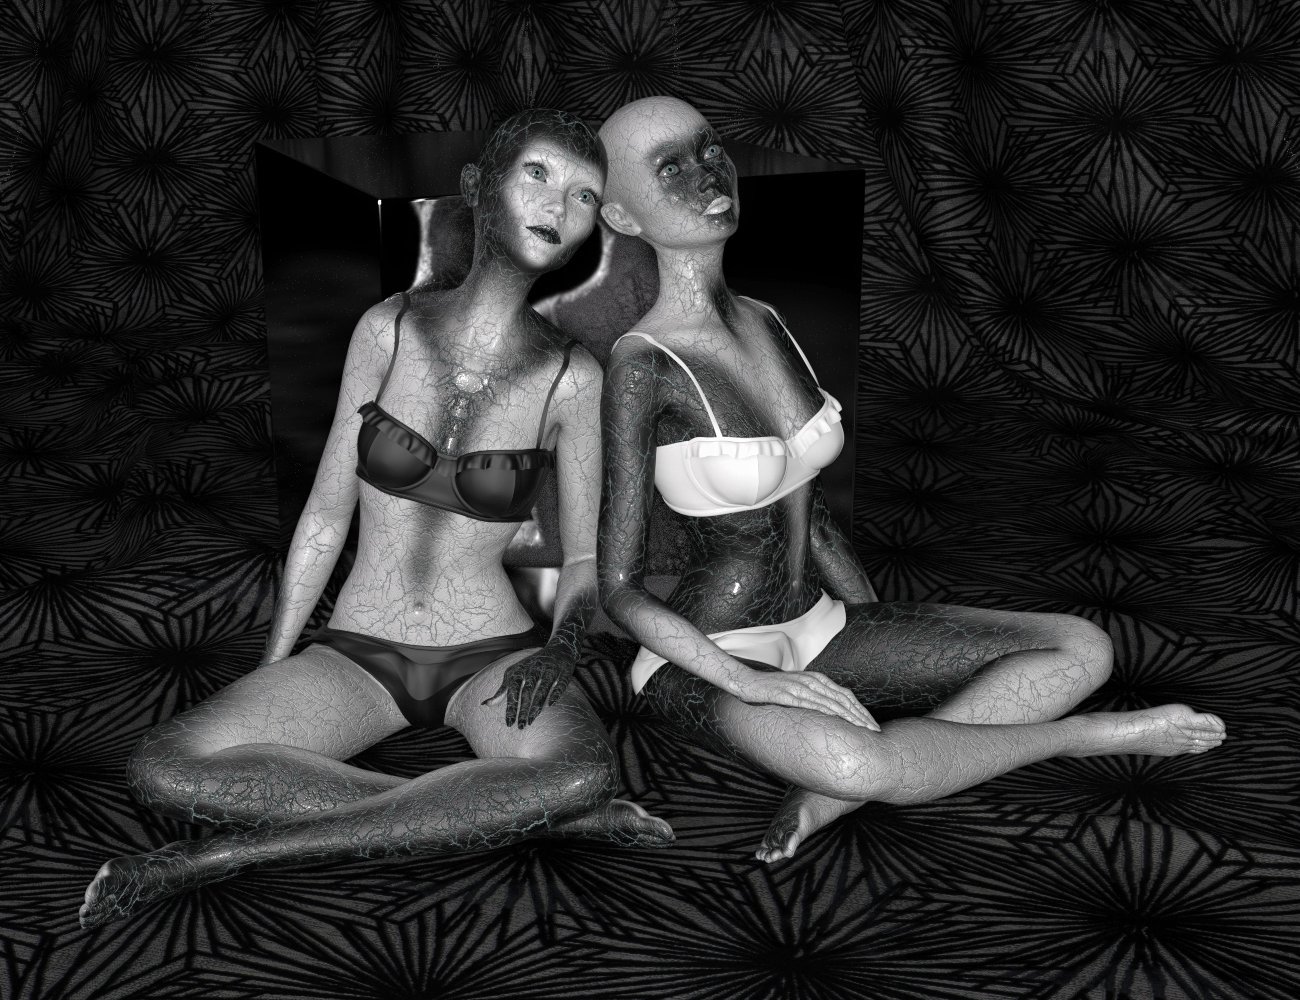 KamilyAnn for Zelara 8 by: 3Diva, 3D Models by Daz 3D